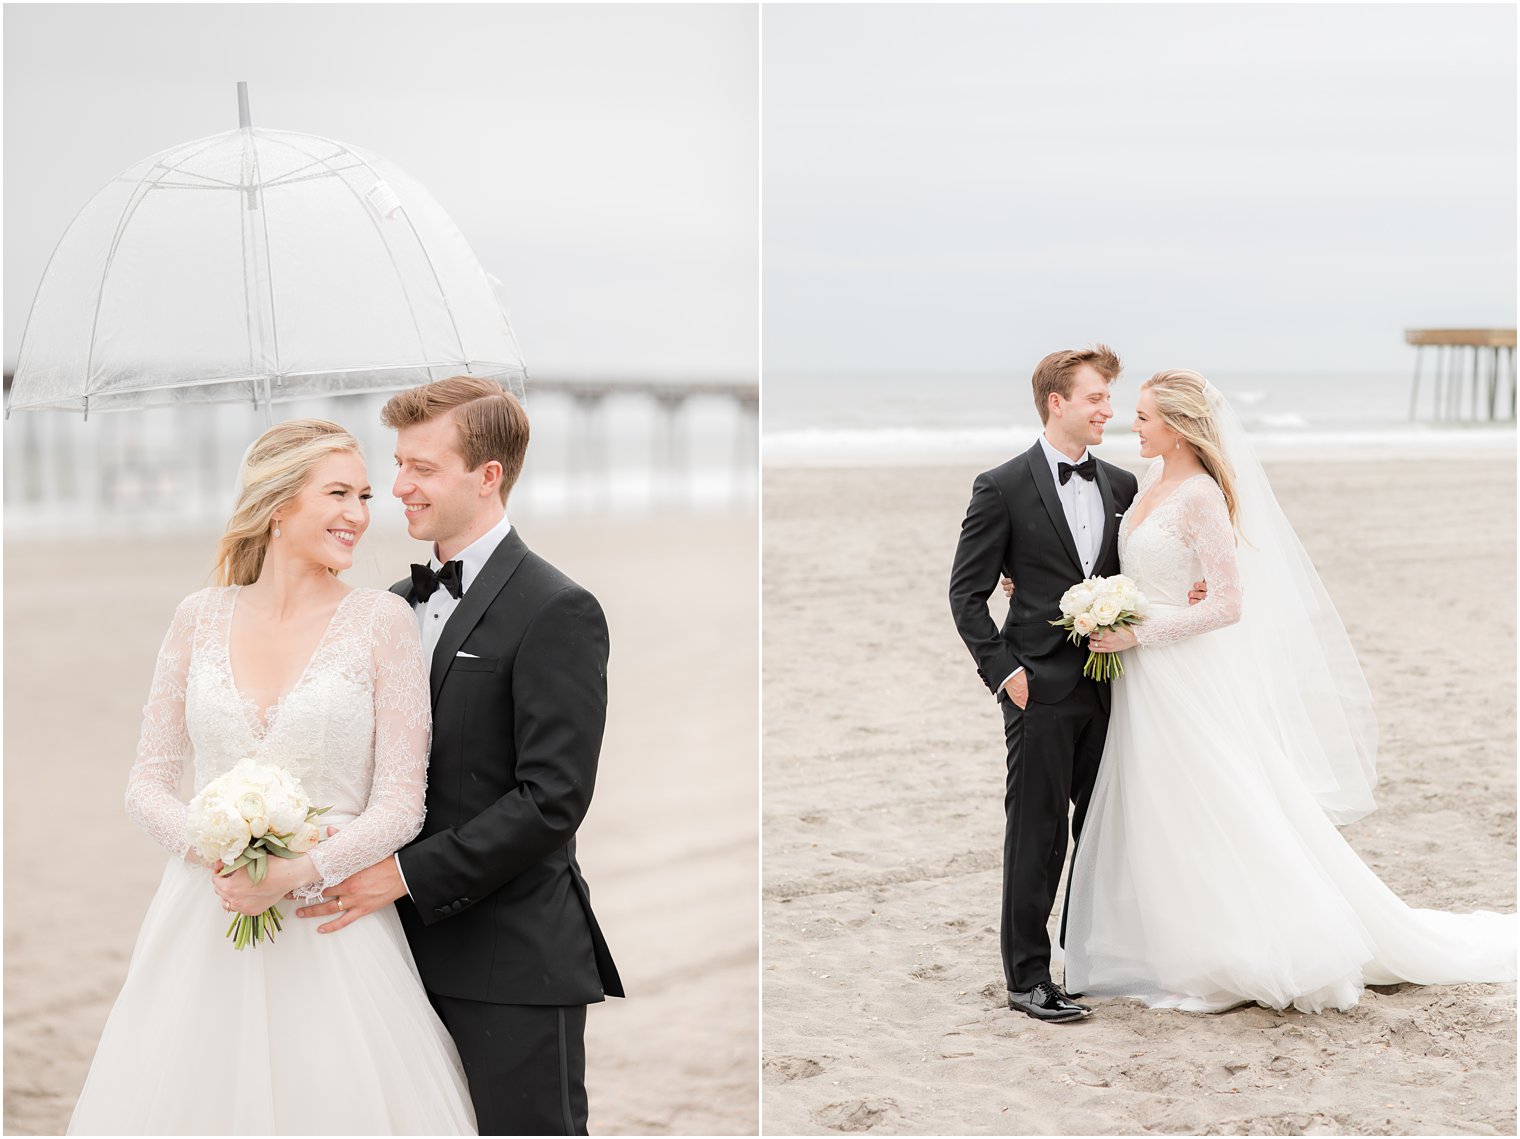 newlyweds pose under clear umbrella on rainy wedding day on beach